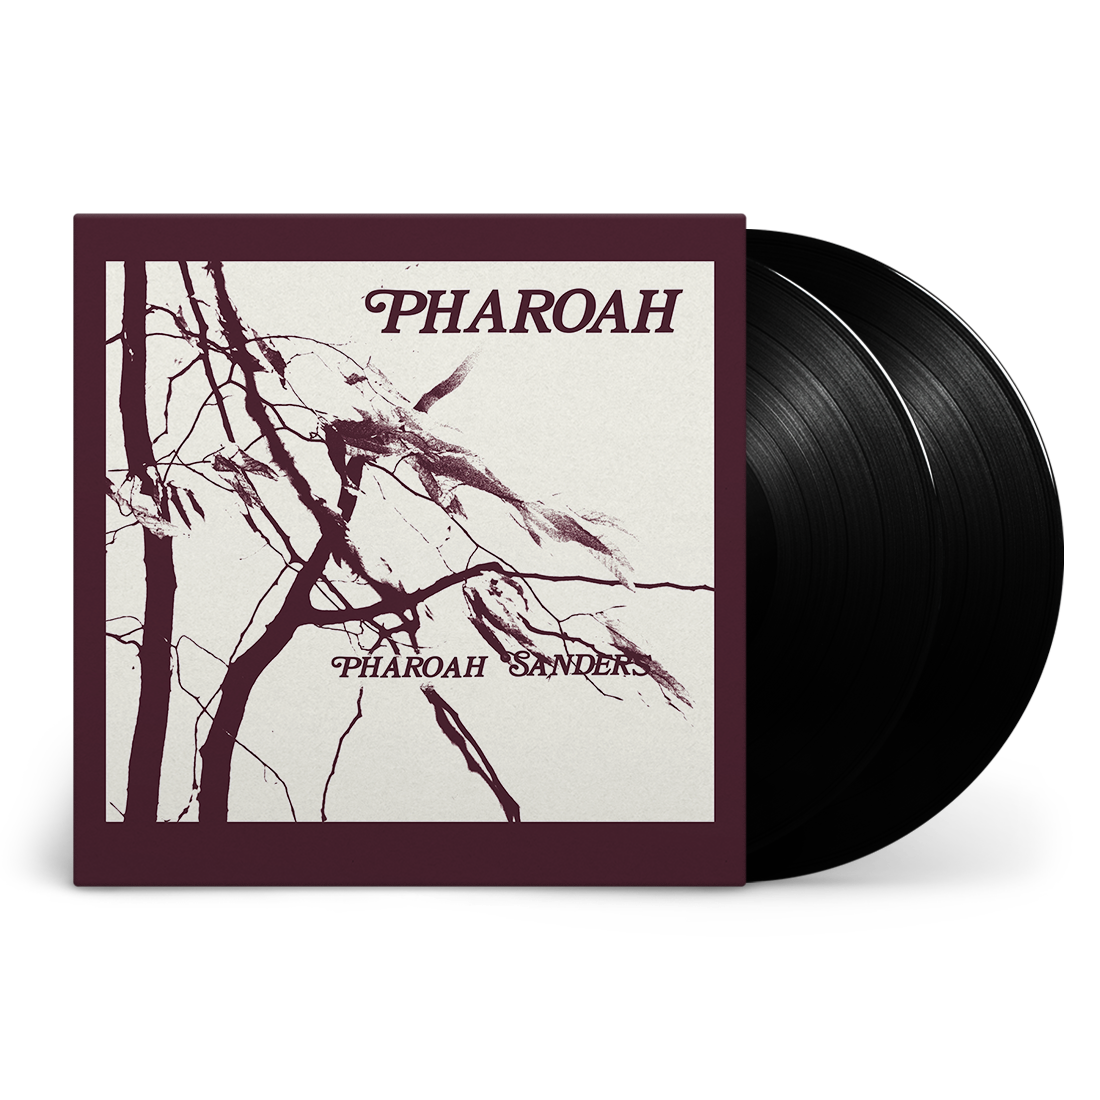 Pharoah Sanders - Pharoah: 2LP Boxset - Sound of Vinyl